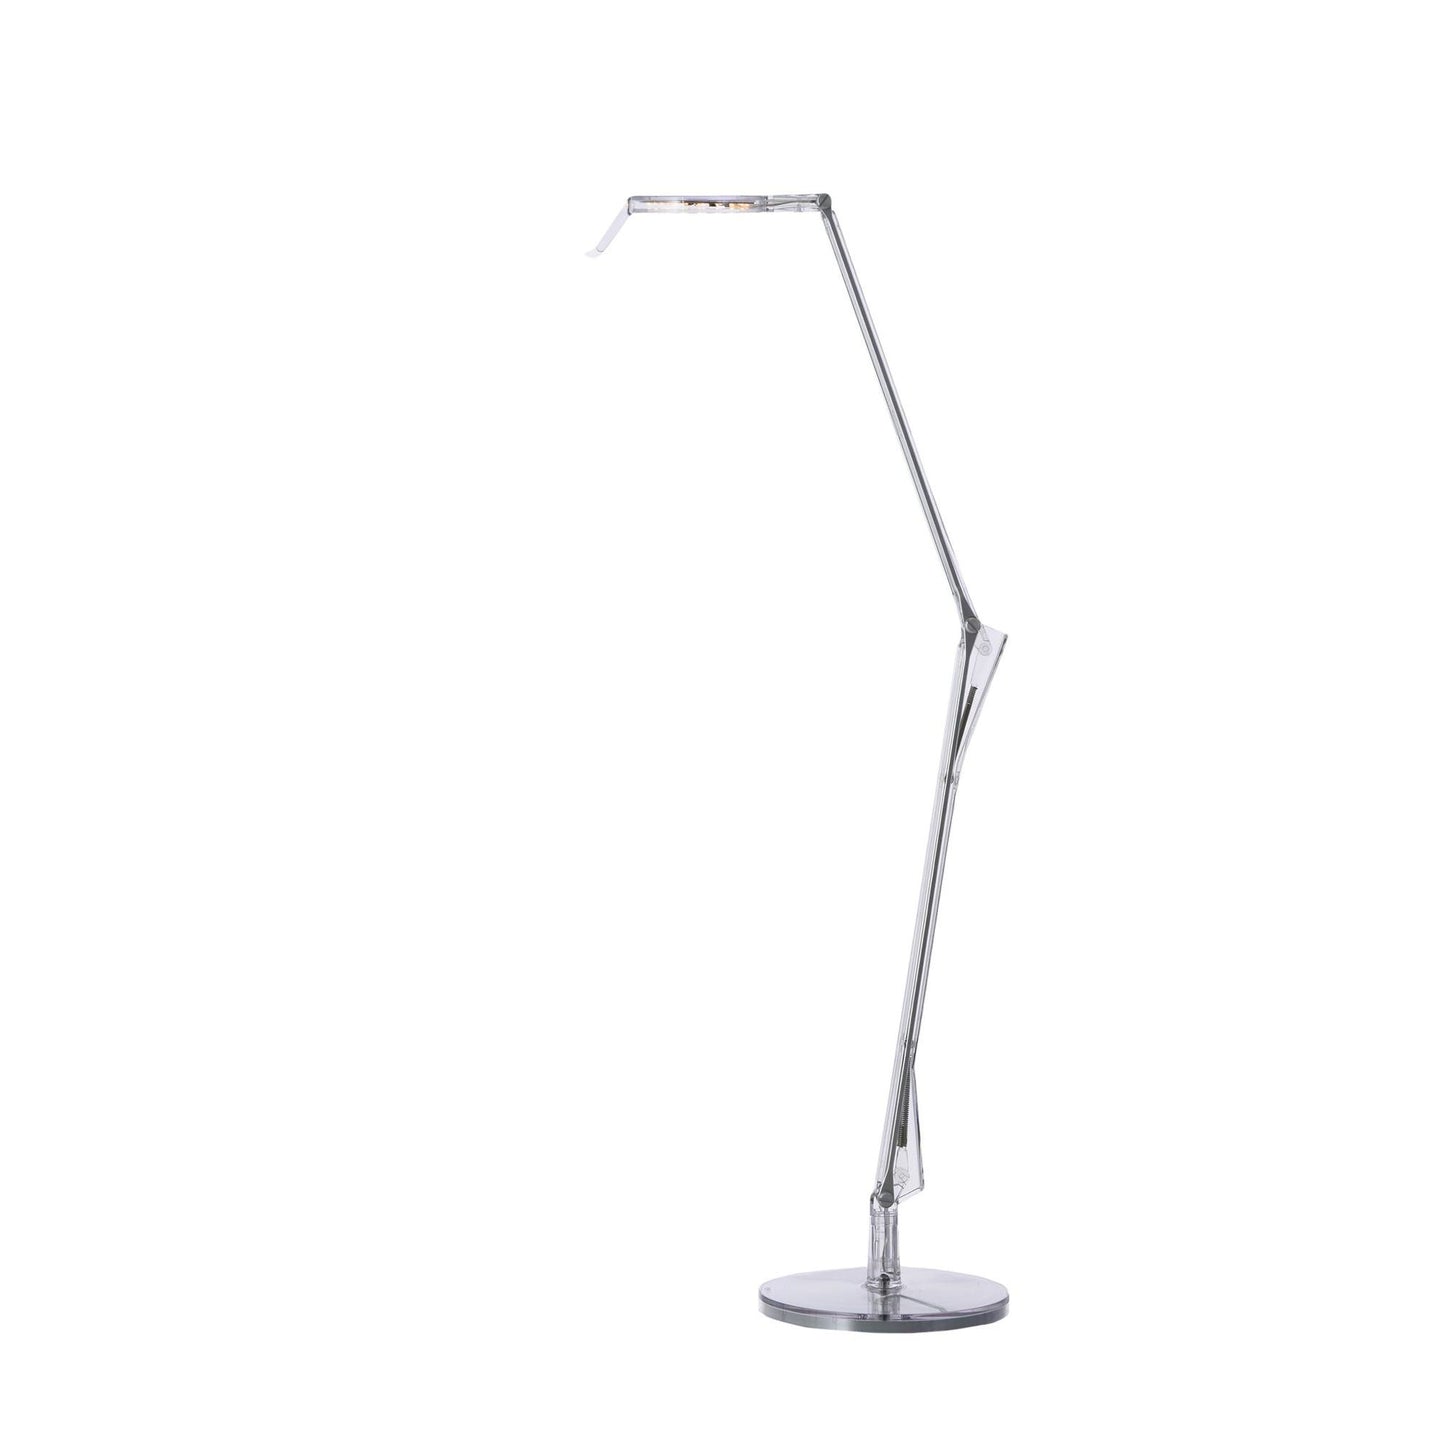 Aledin Tec Table Lamp by Kartell #Clear